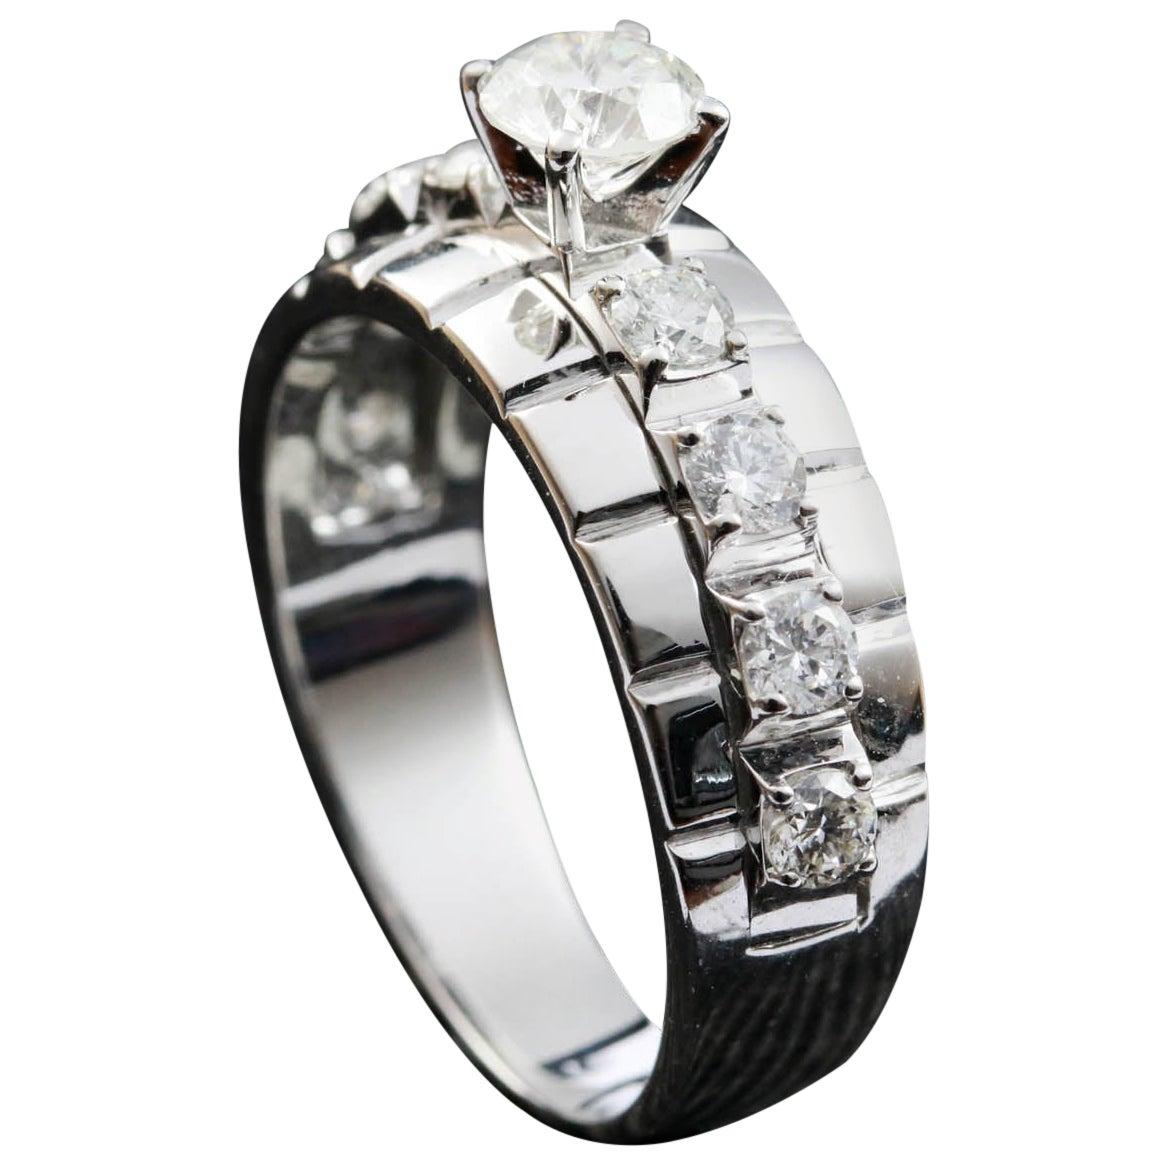 For Sale:  Brilliant Round Cut Diamond Engagement Ring in 18 Karat White Gold